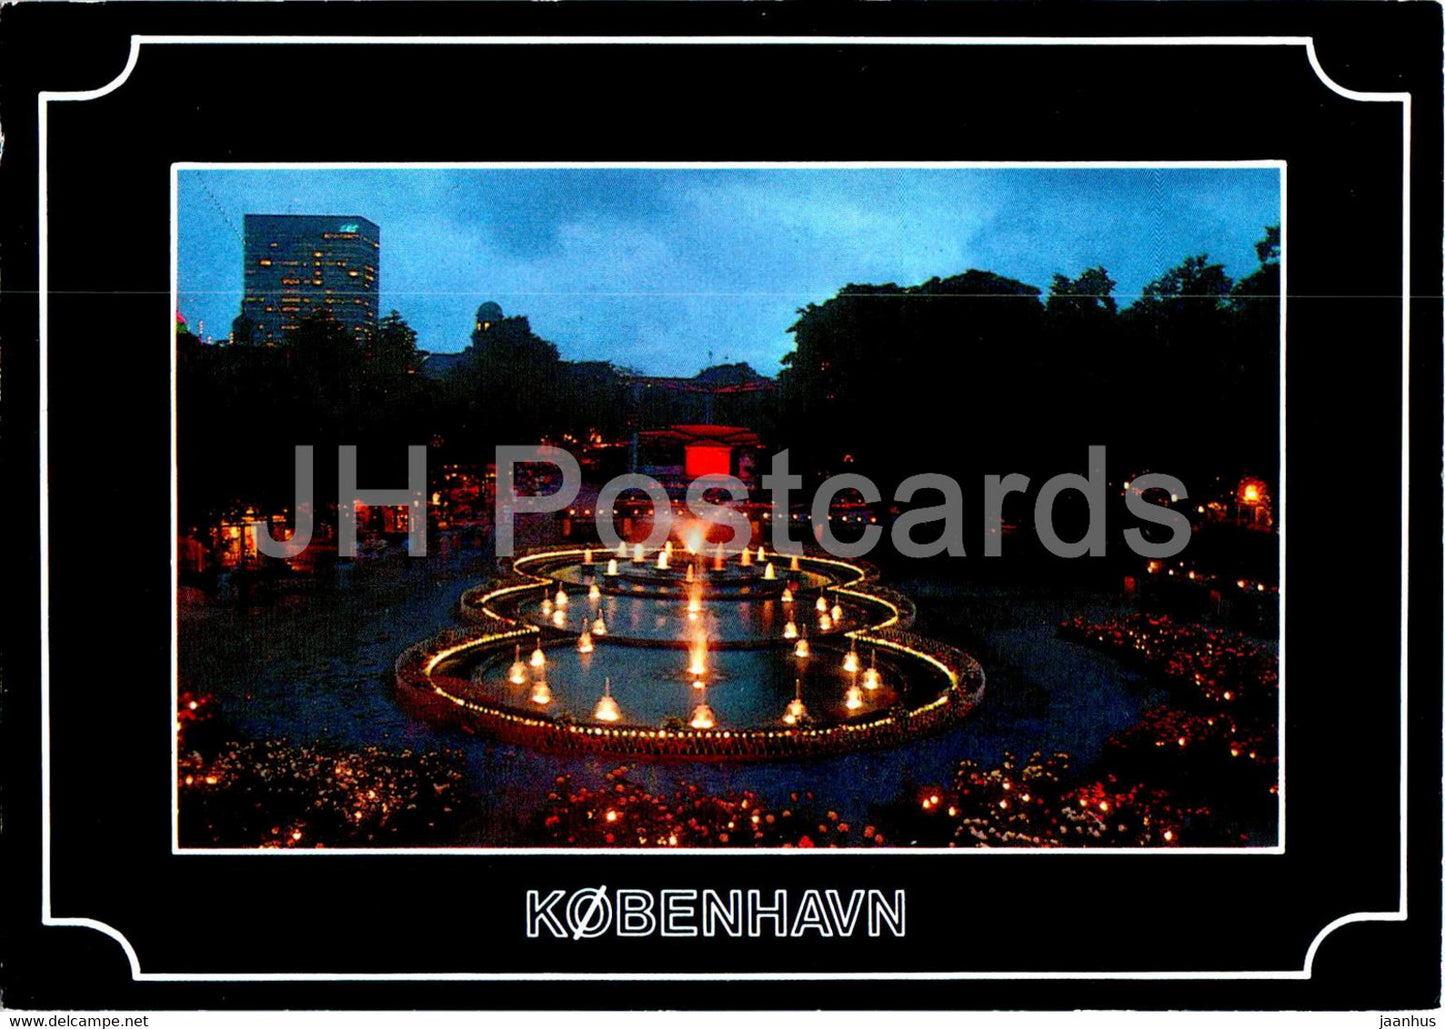 Copenhagen - Kopenhagen - Tivoli - 2000-92 - Denmark - unused - JH Postcards